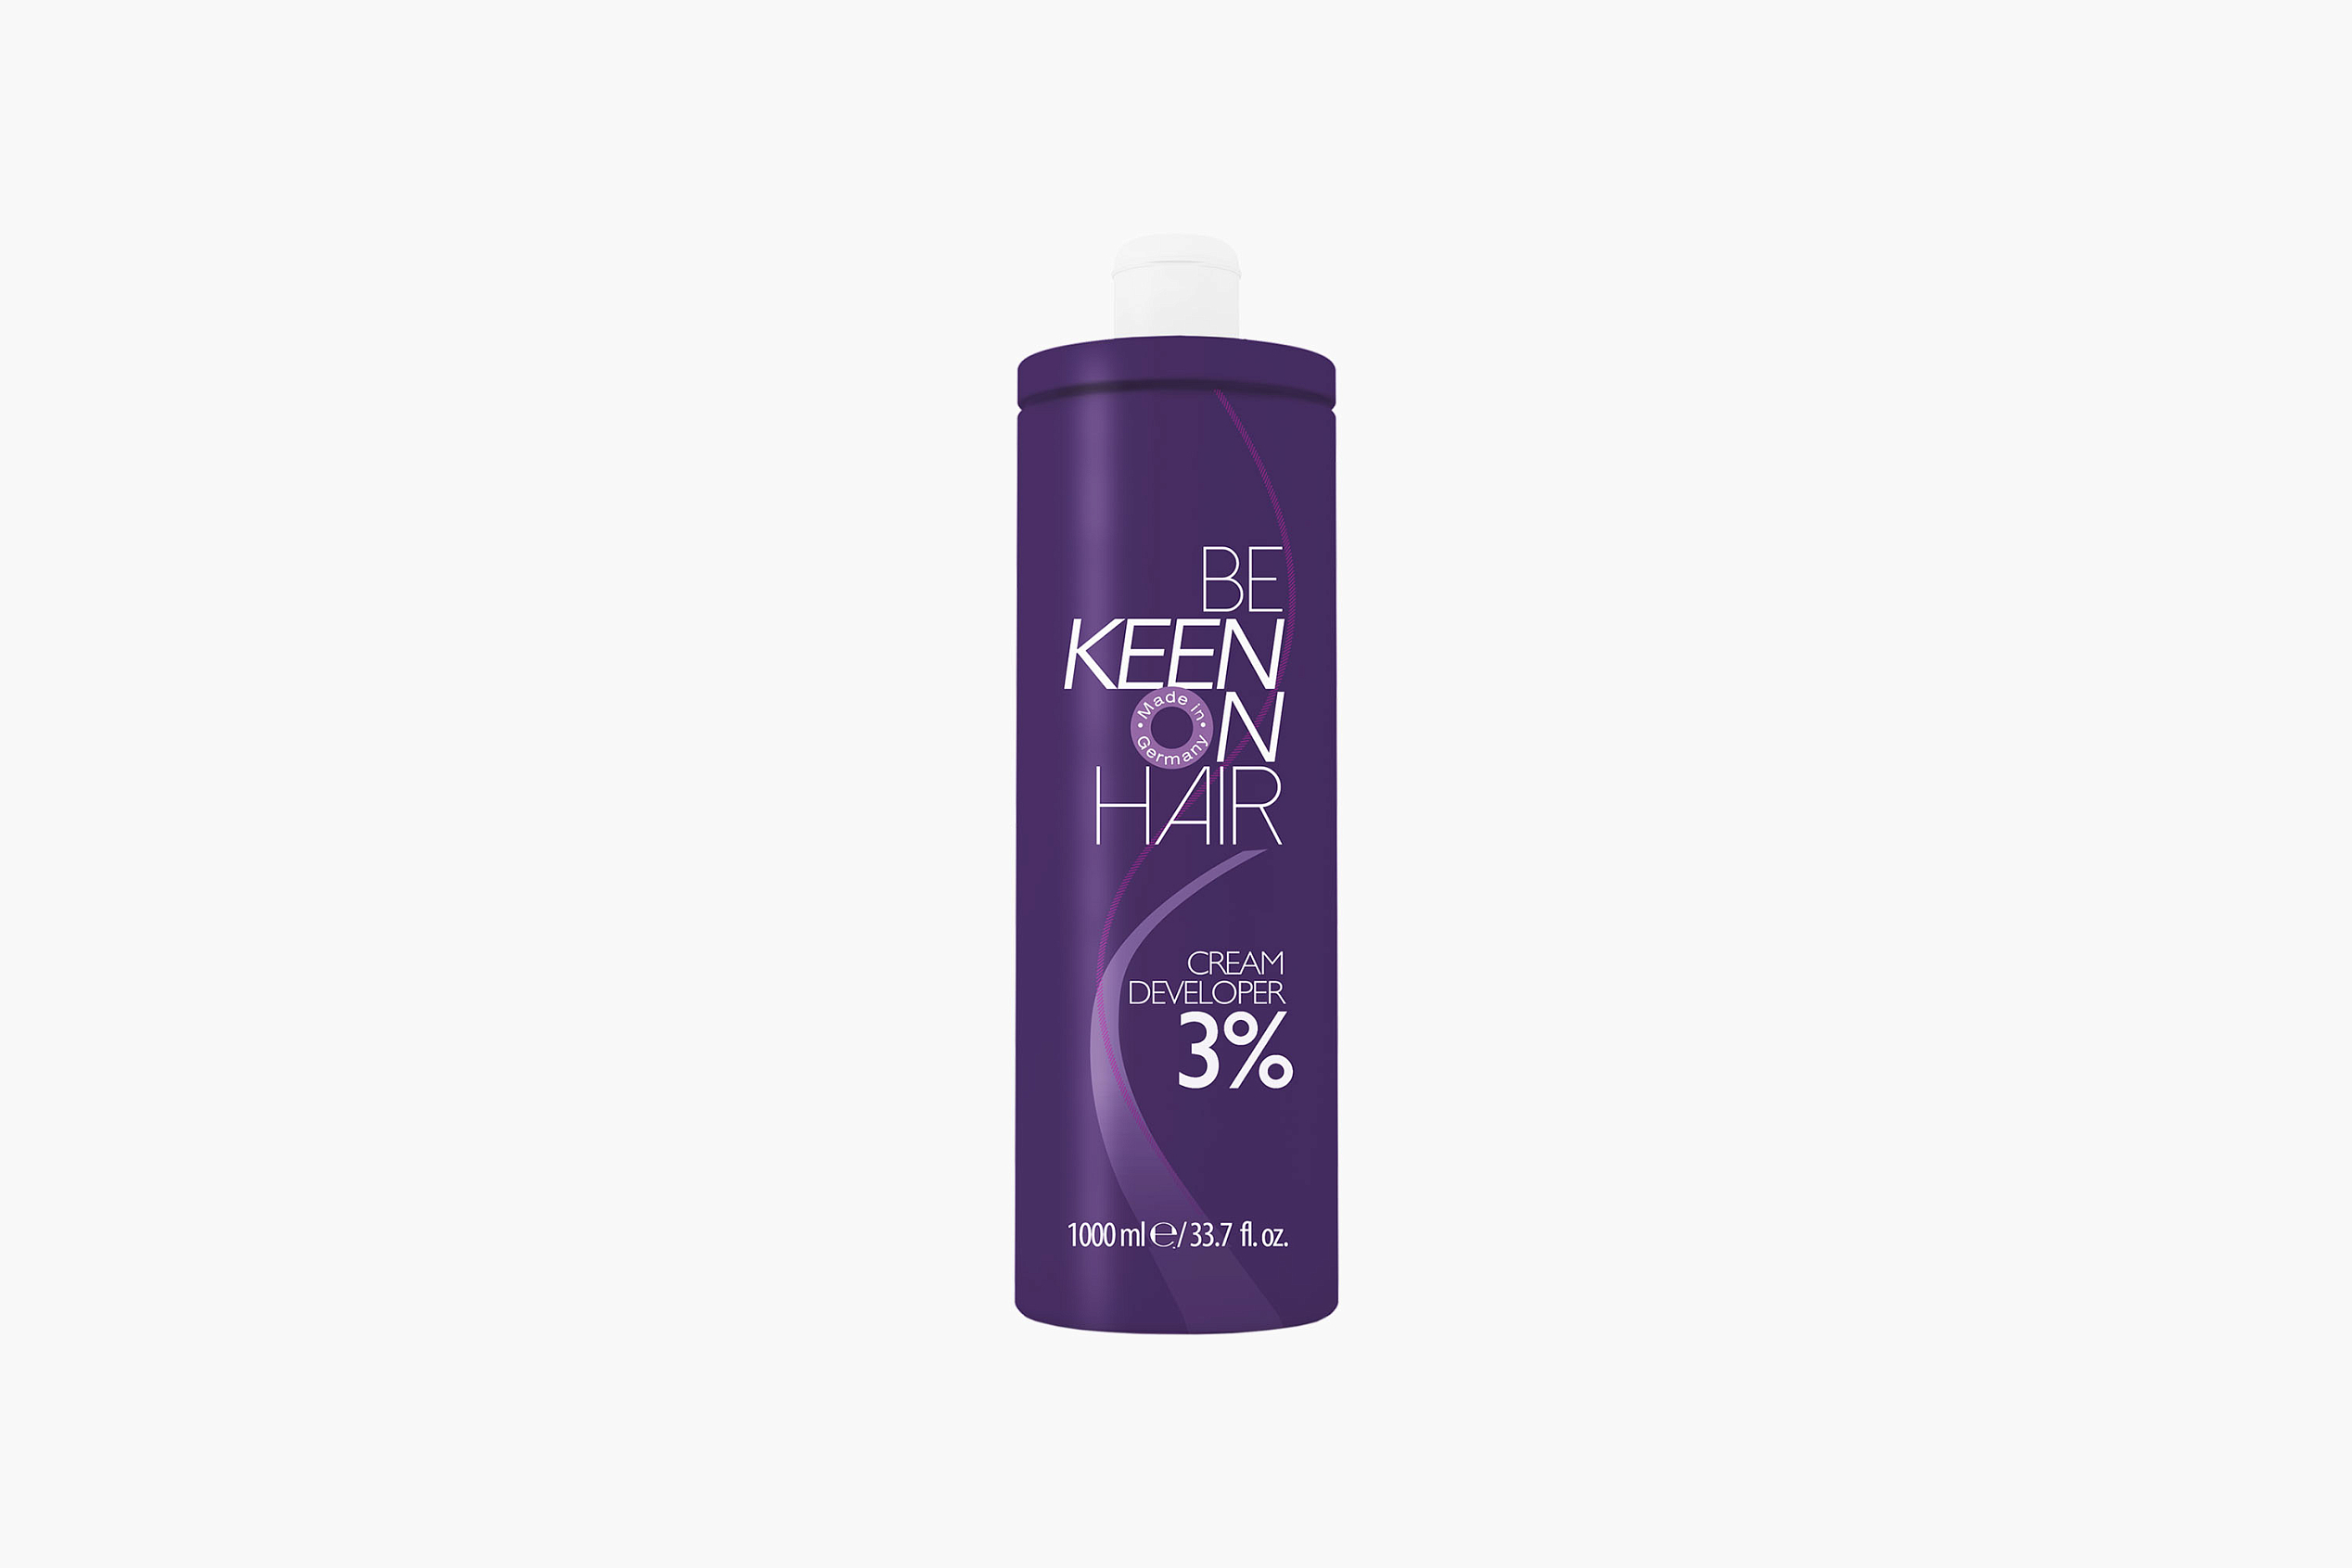 KEEN Cream Developer 3% фото 1